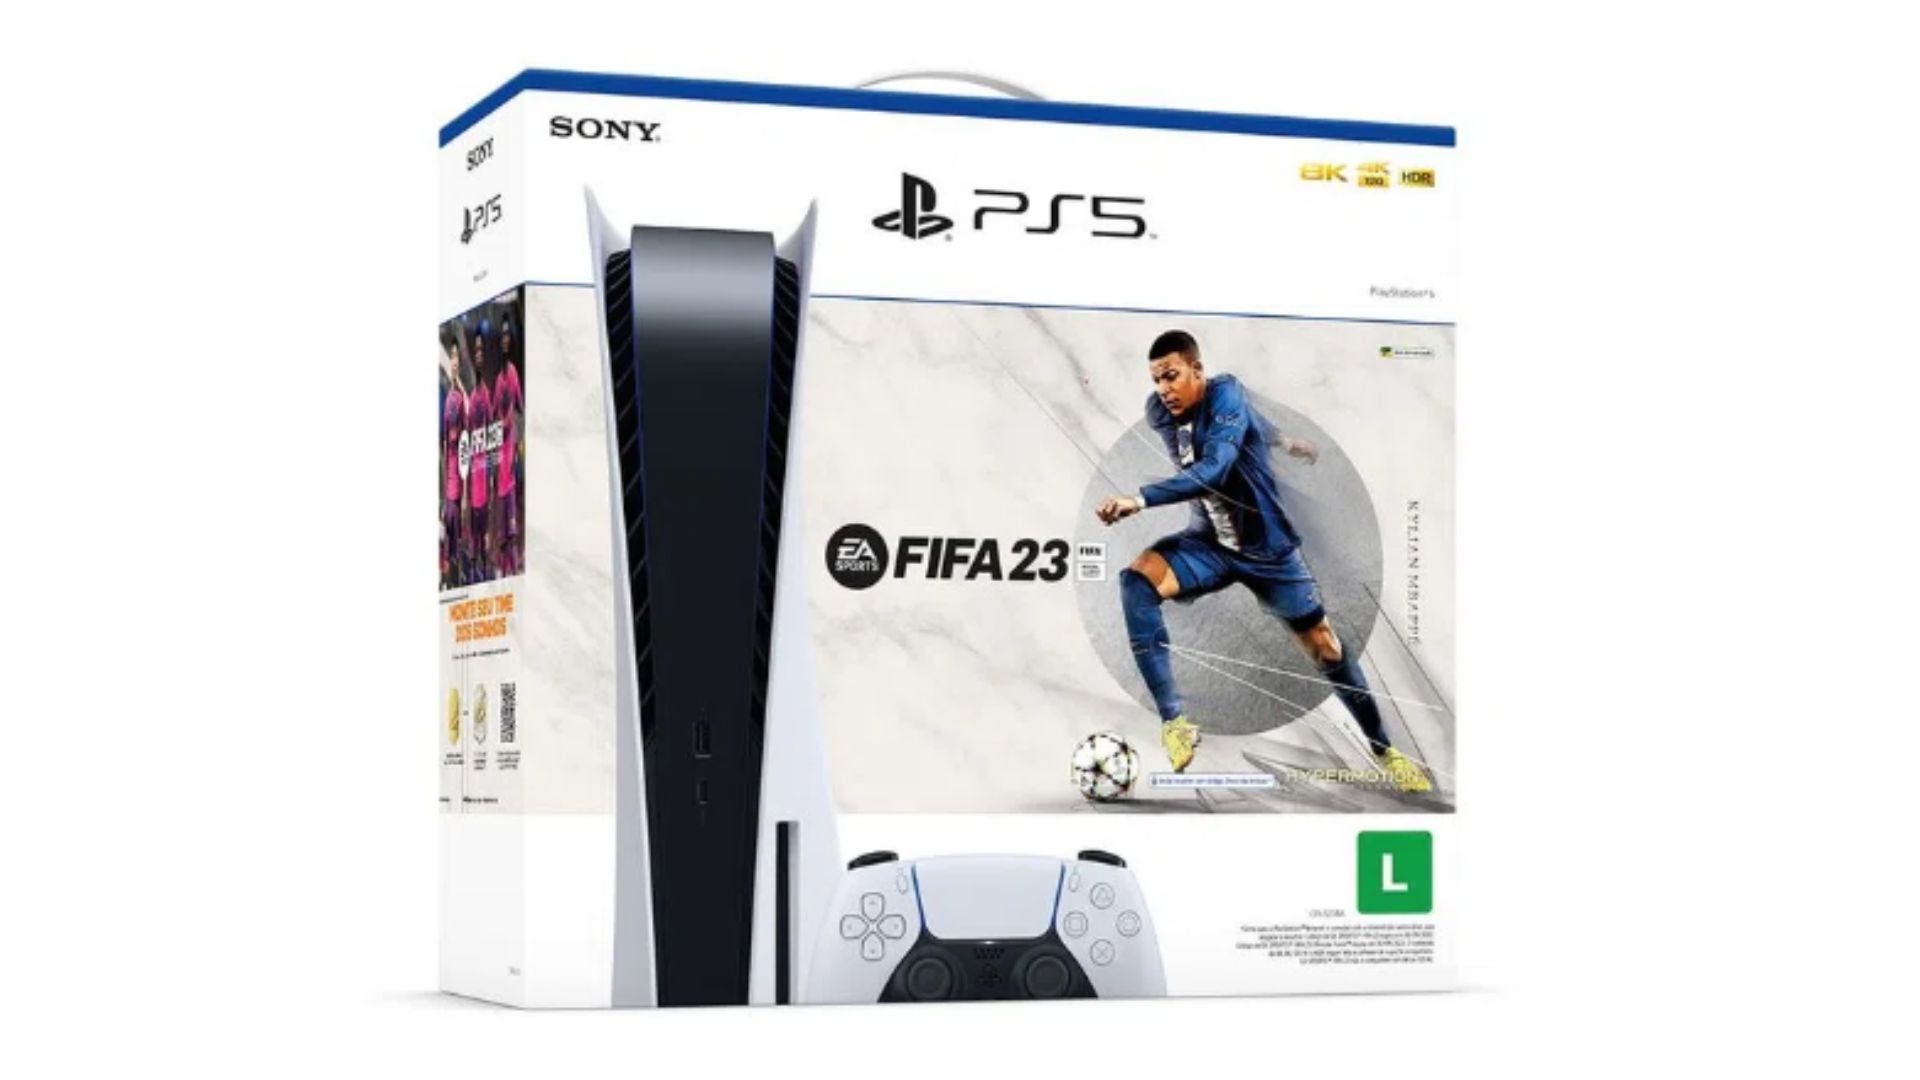 Jogo PC FIFA 22 – MediaMarkt